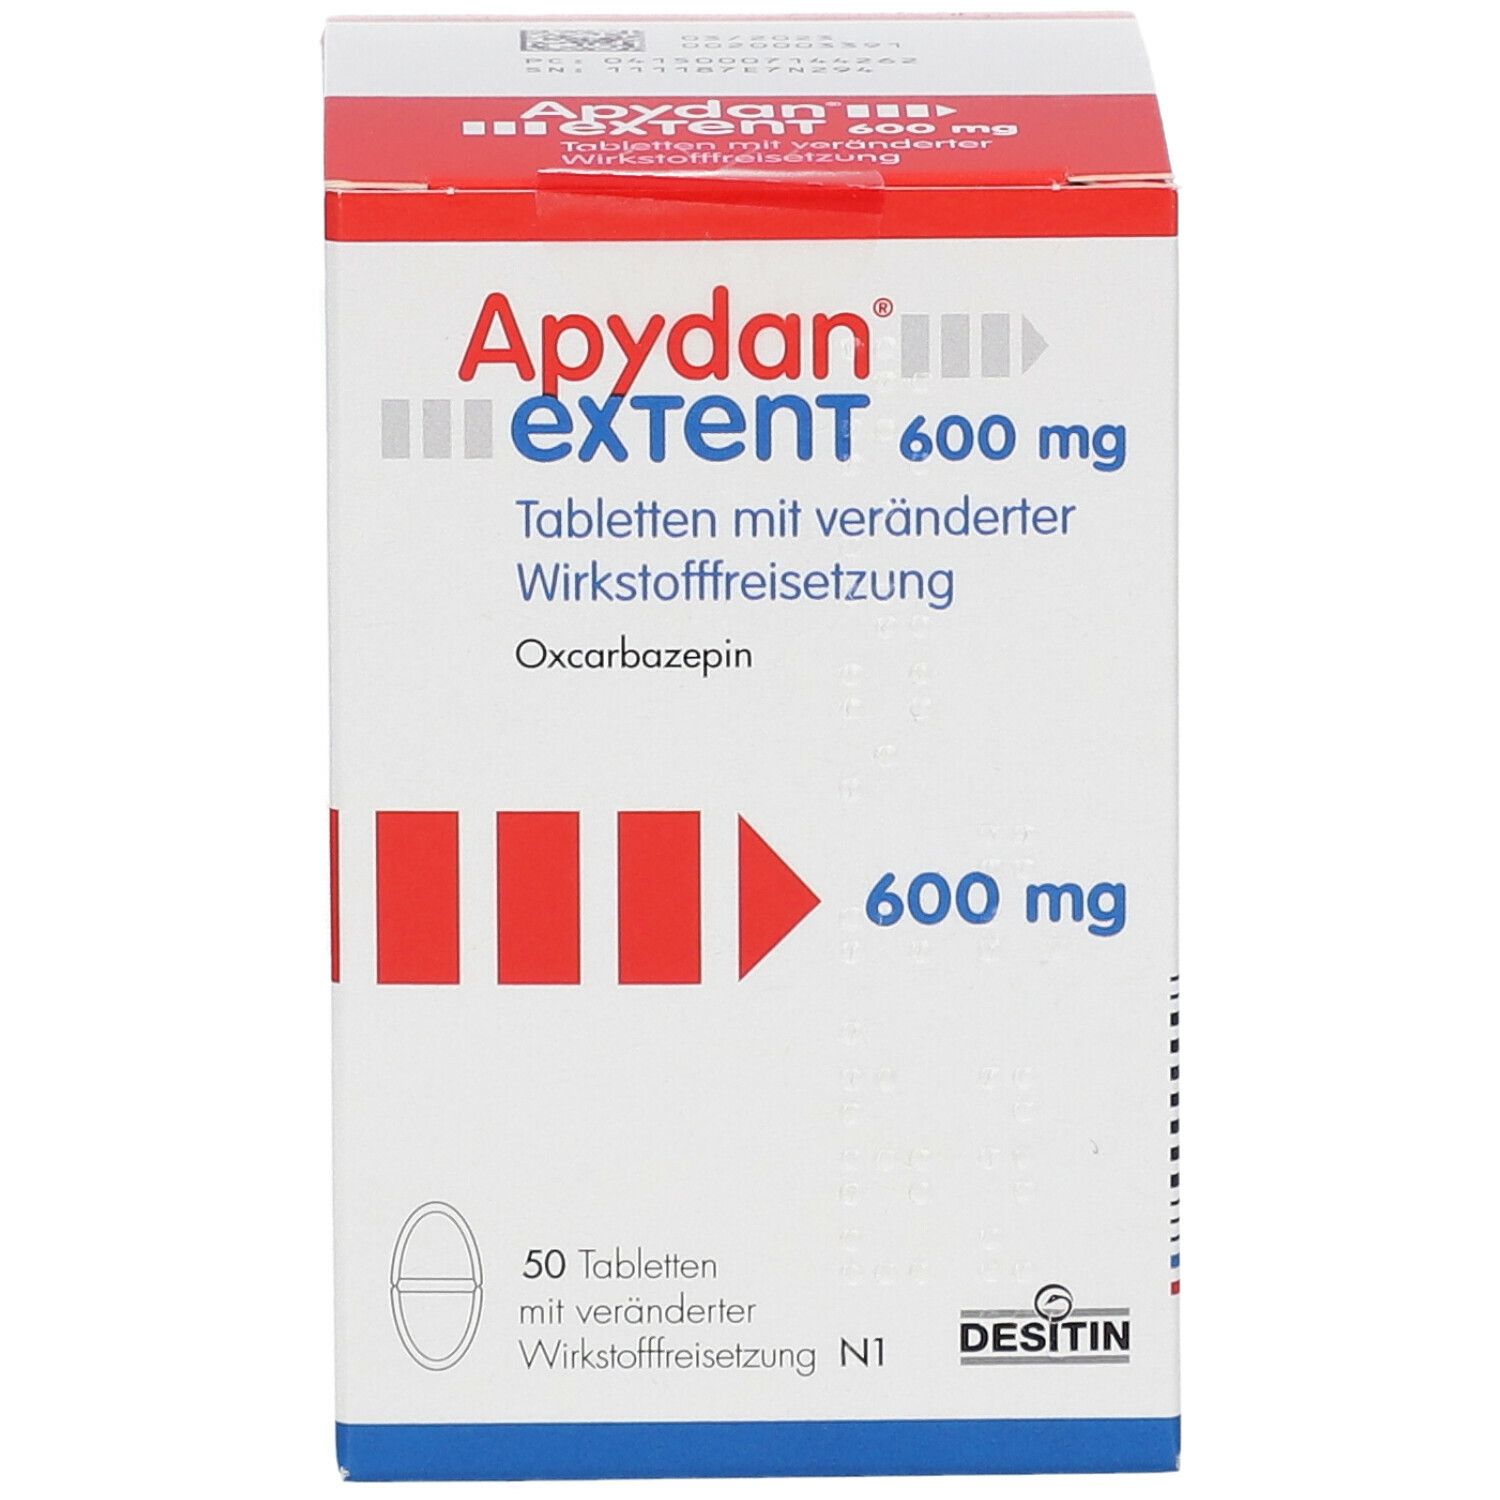 Apydan® extent 600 mg